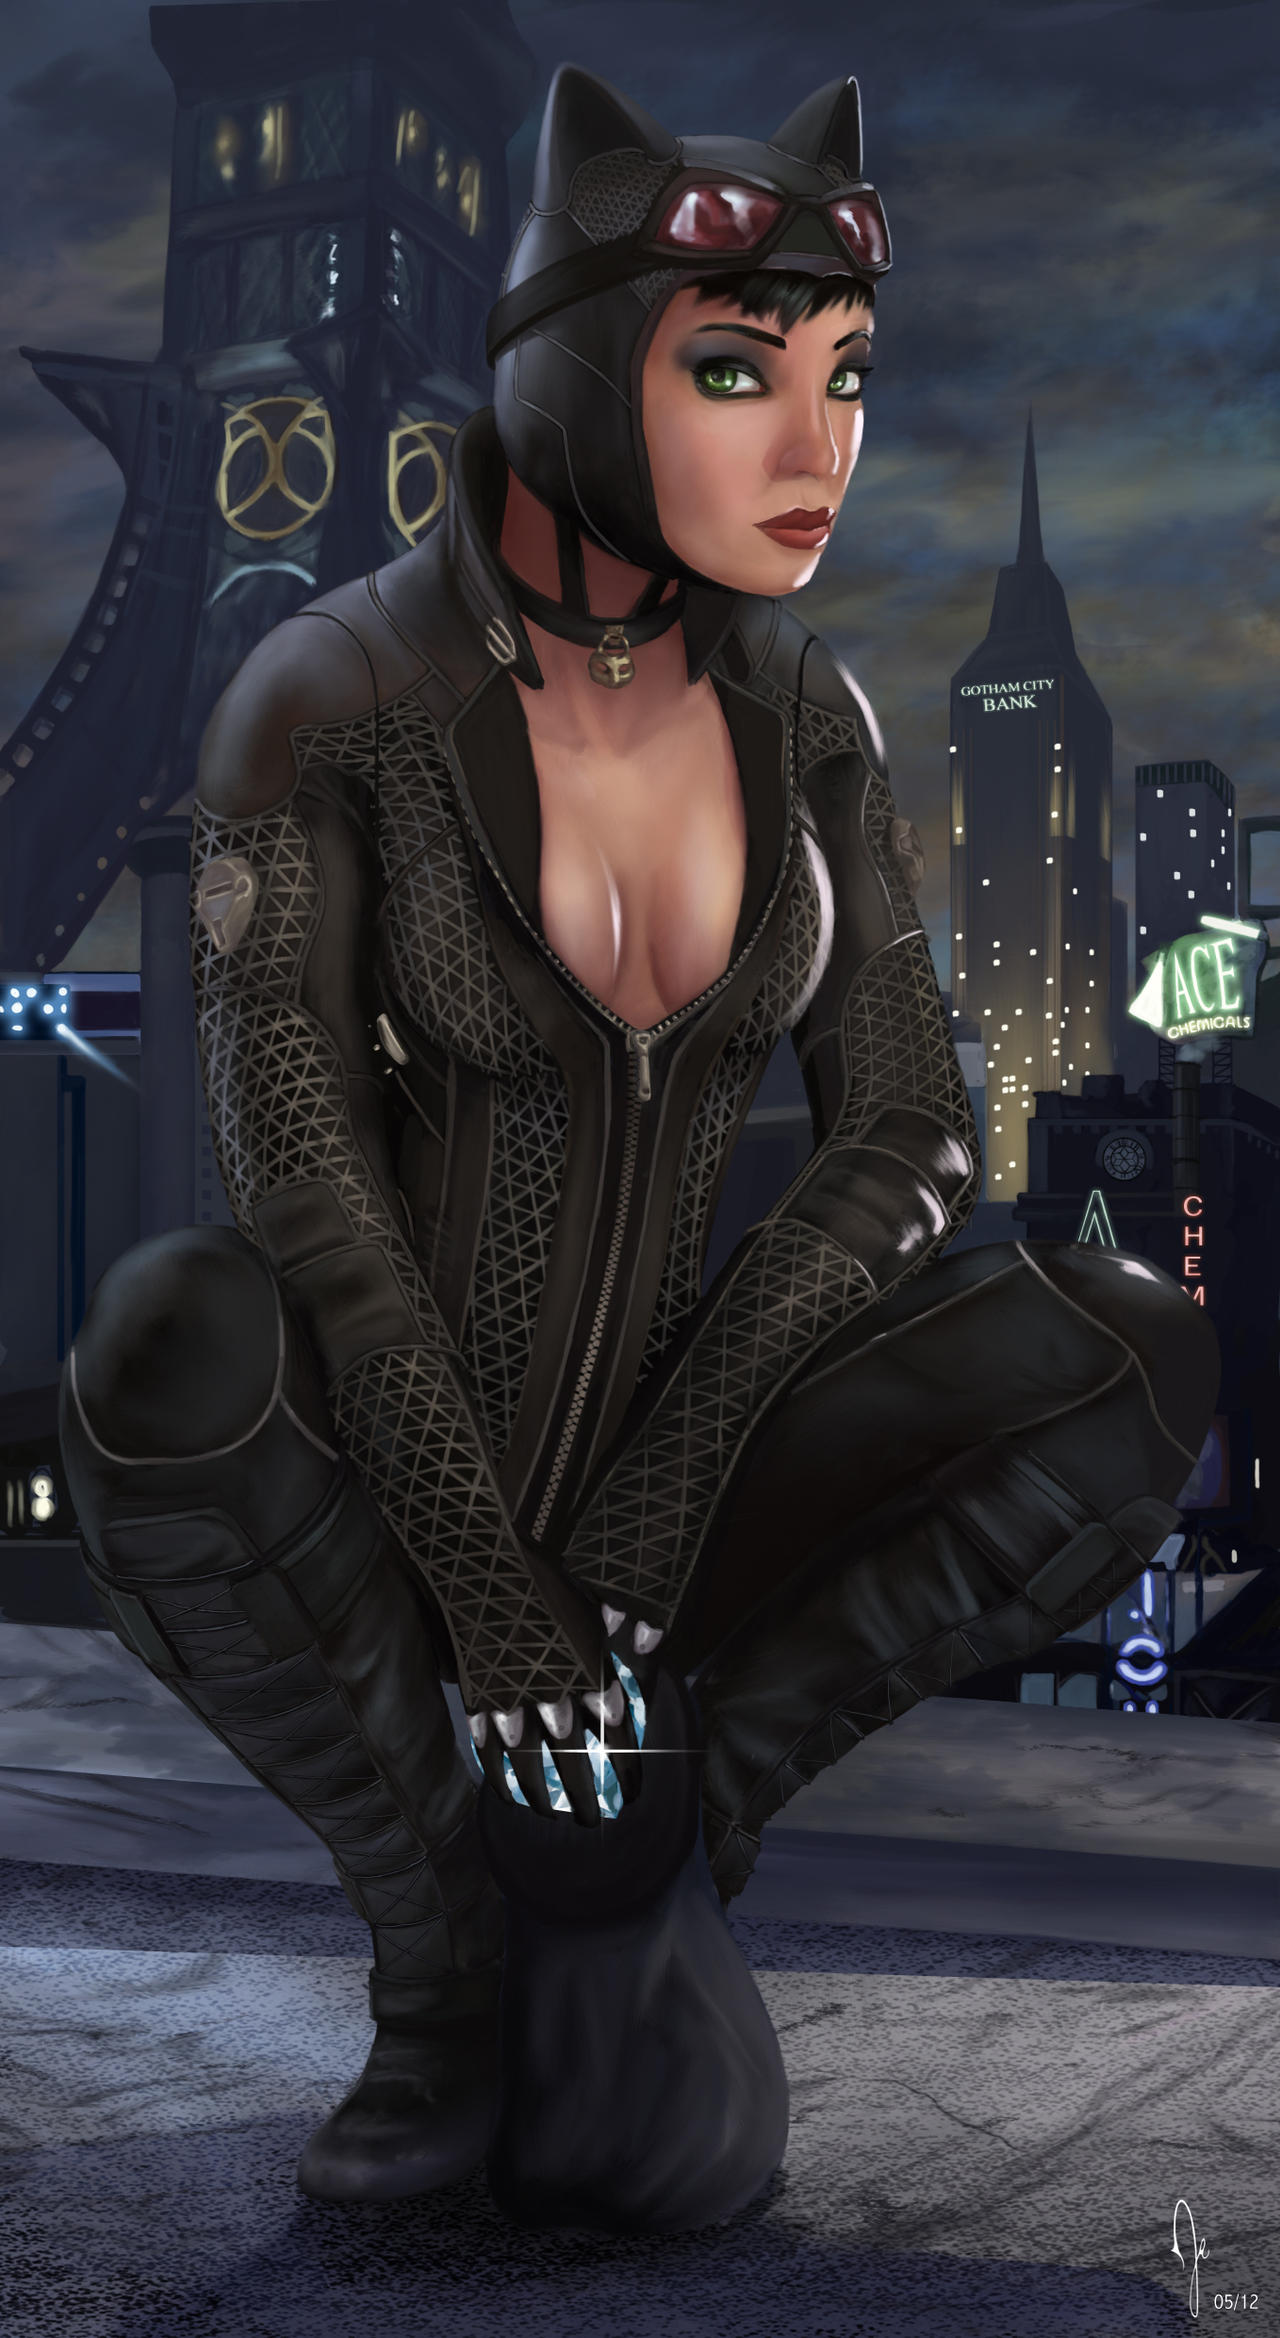 Batman Arkham City - Catwoman by RuddsArt on DeviantArt